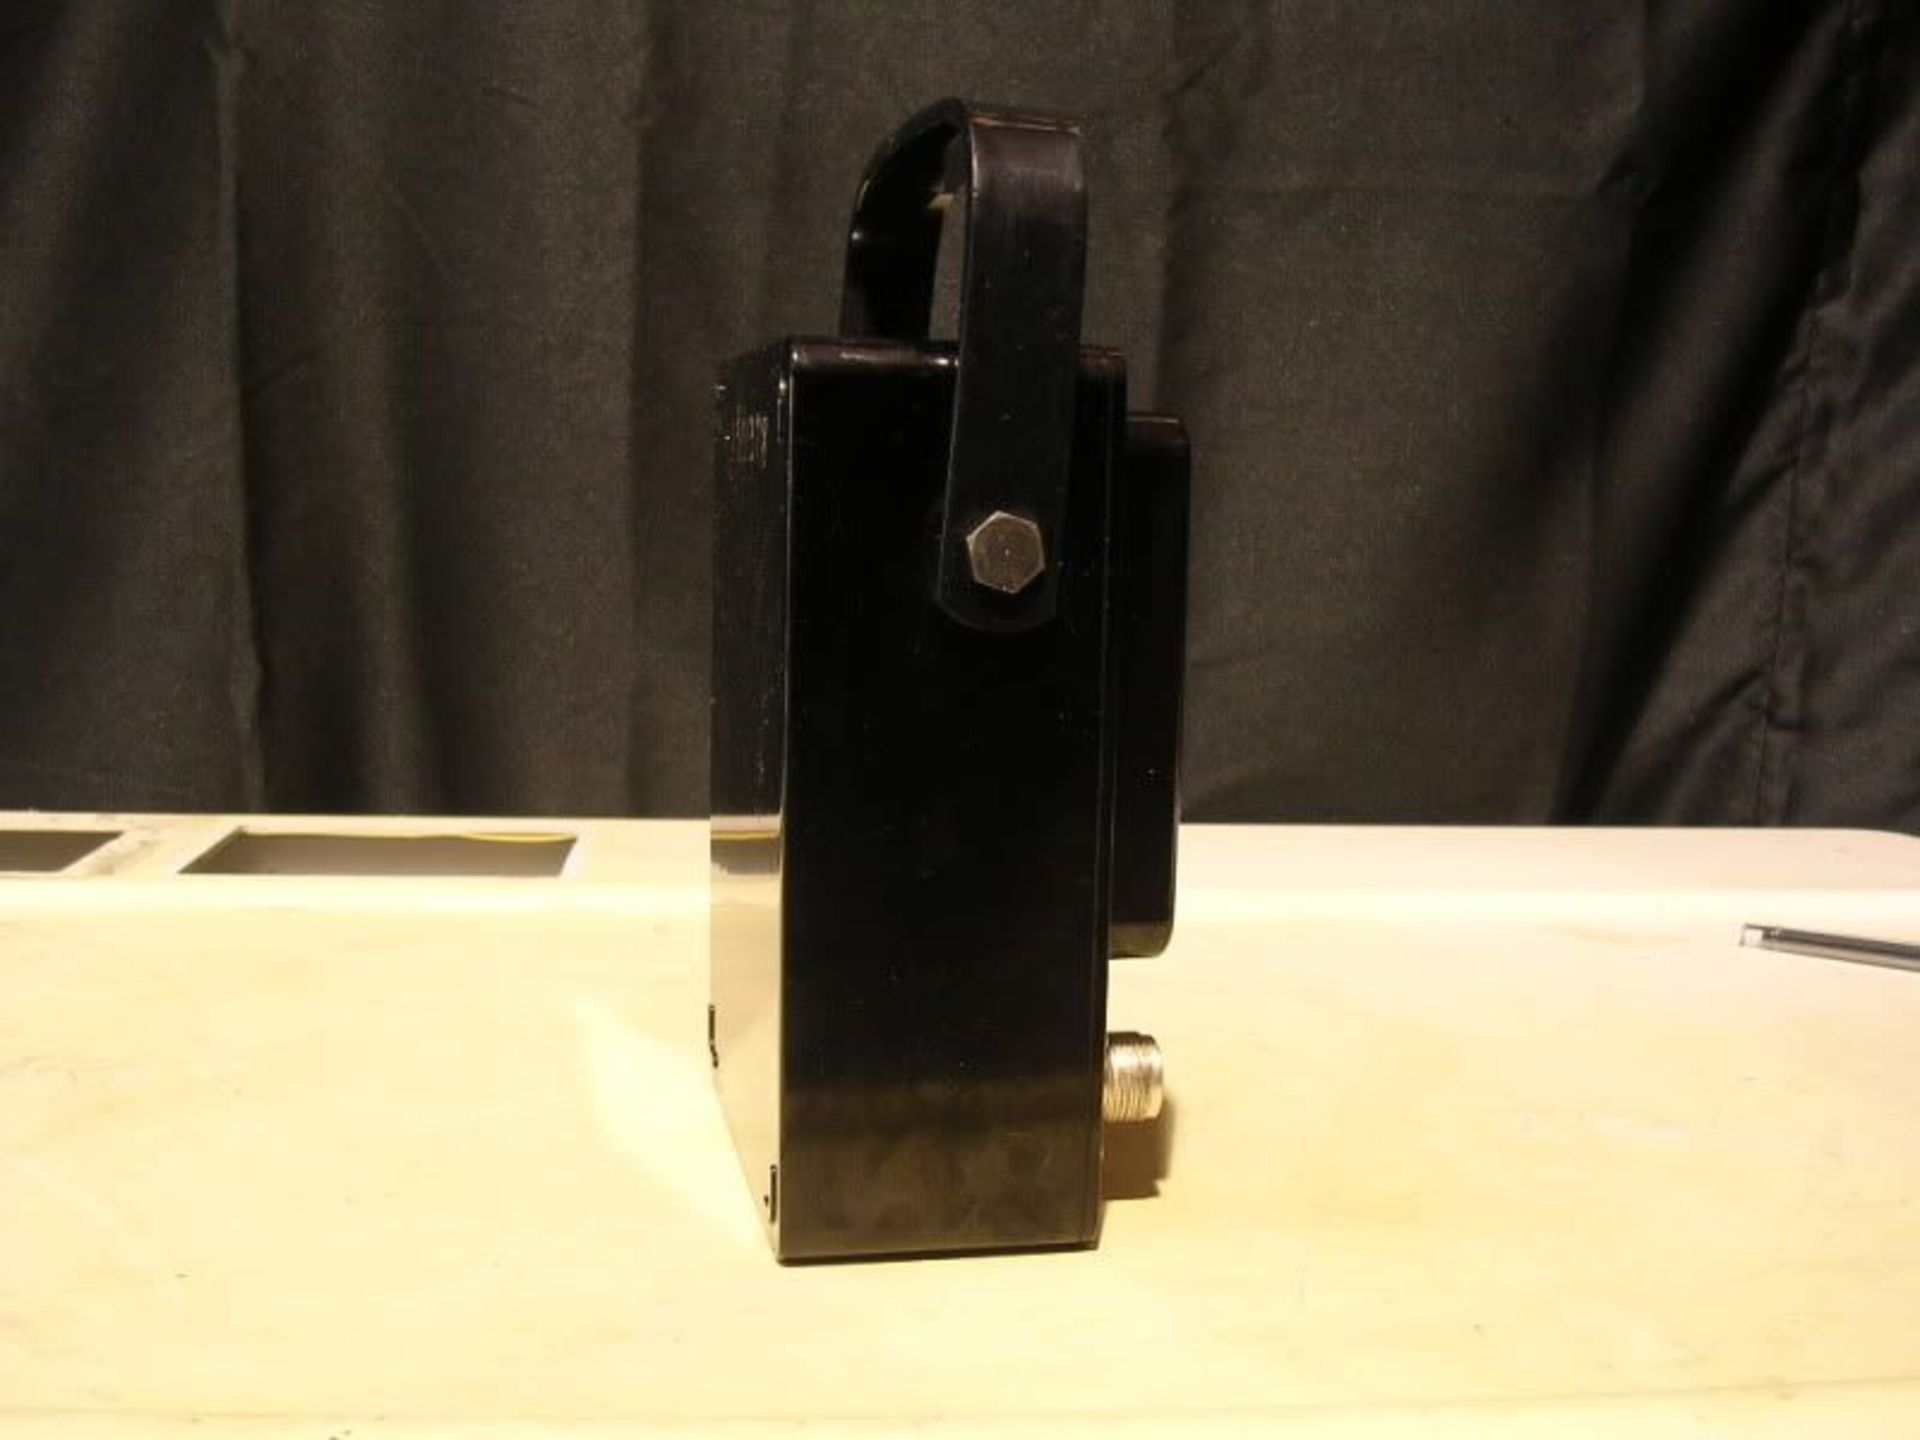 Fluke Volt Box Model 80A-2 Volt Meter, Qty 1, 220766198358 - Image 4 of 4